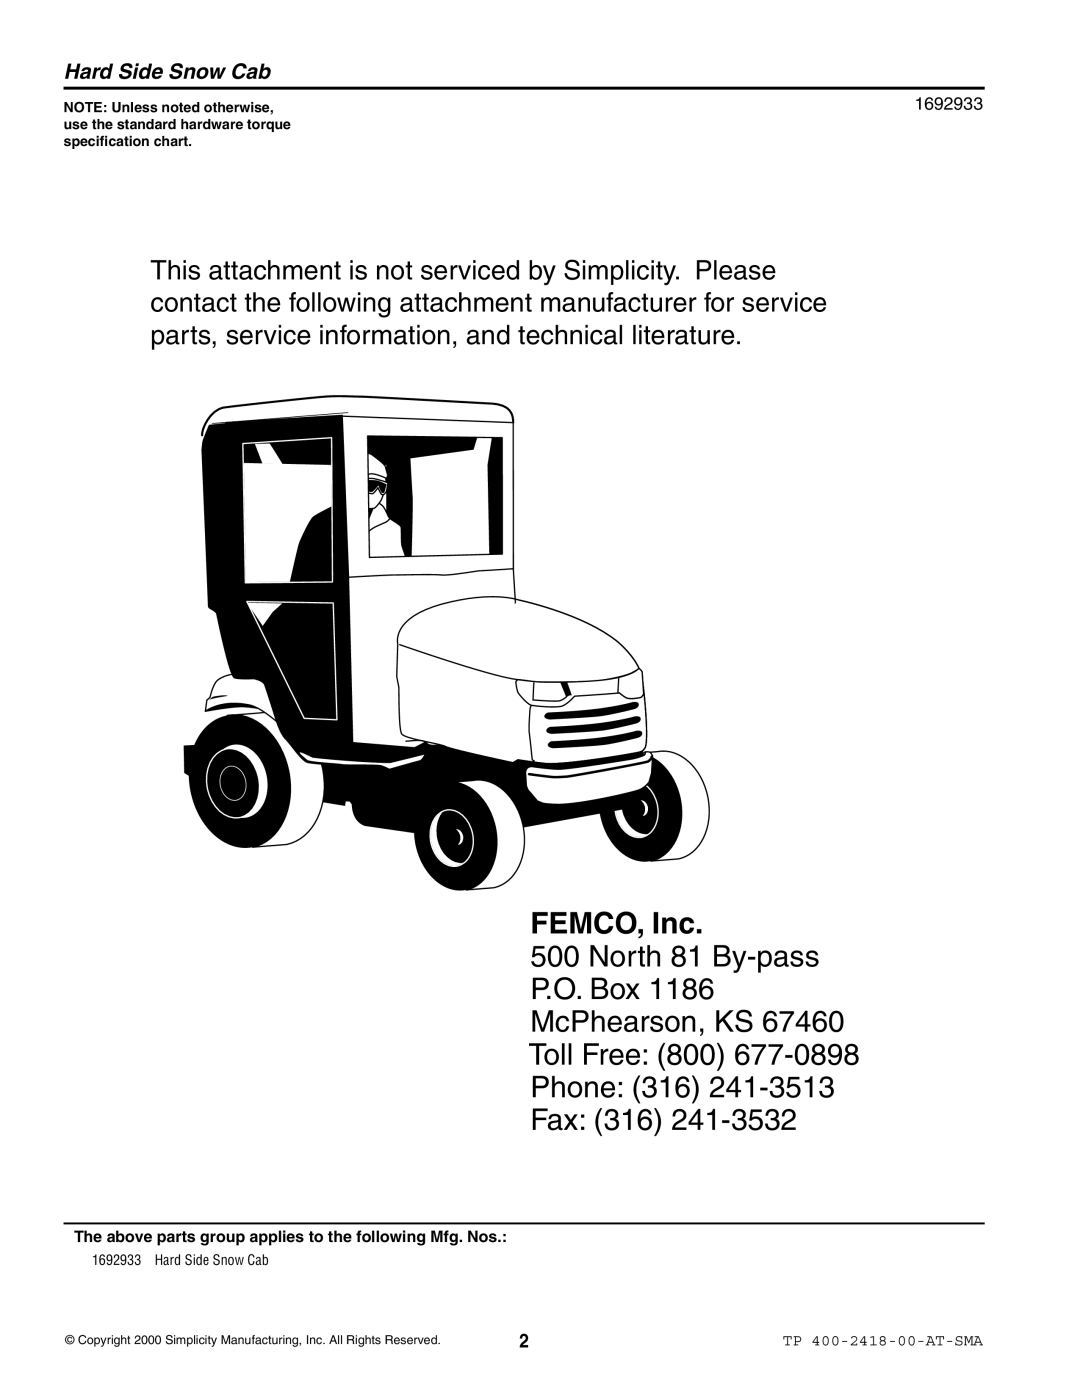 Snapper manual TP 400-2418-00-AT-SMA, FEMCO, Inc, North 81 By-pass P.O. Box McPhearson, KS, Toll Free 800 Phone 316 Fax 